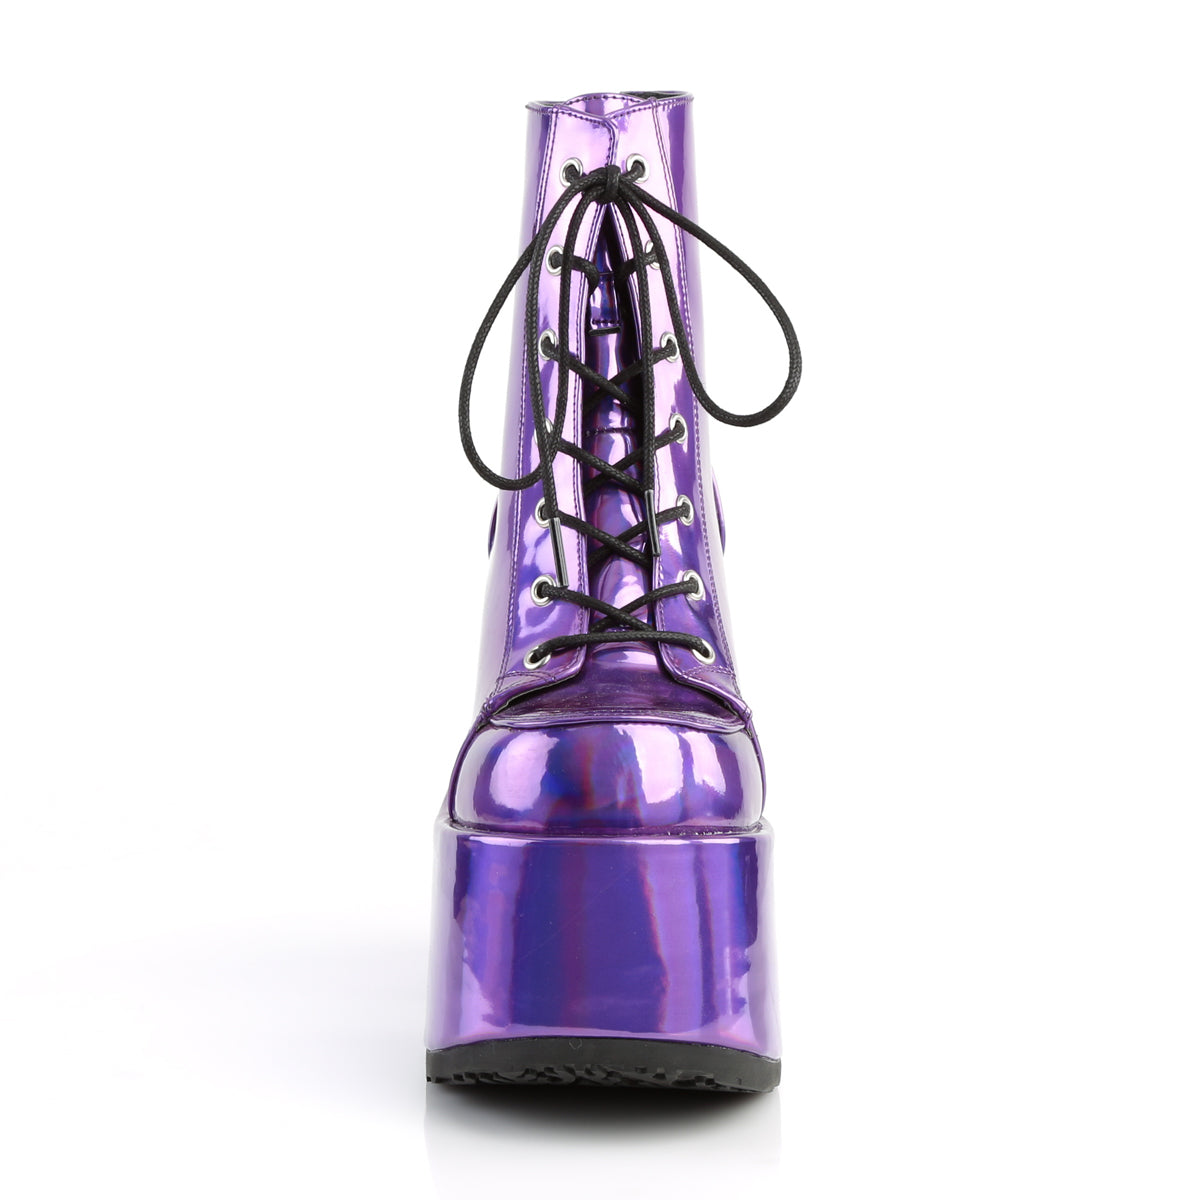 DemoniaCult Womens Ankle Boots CAMEL-203 Purple Hologram Vegan Leather